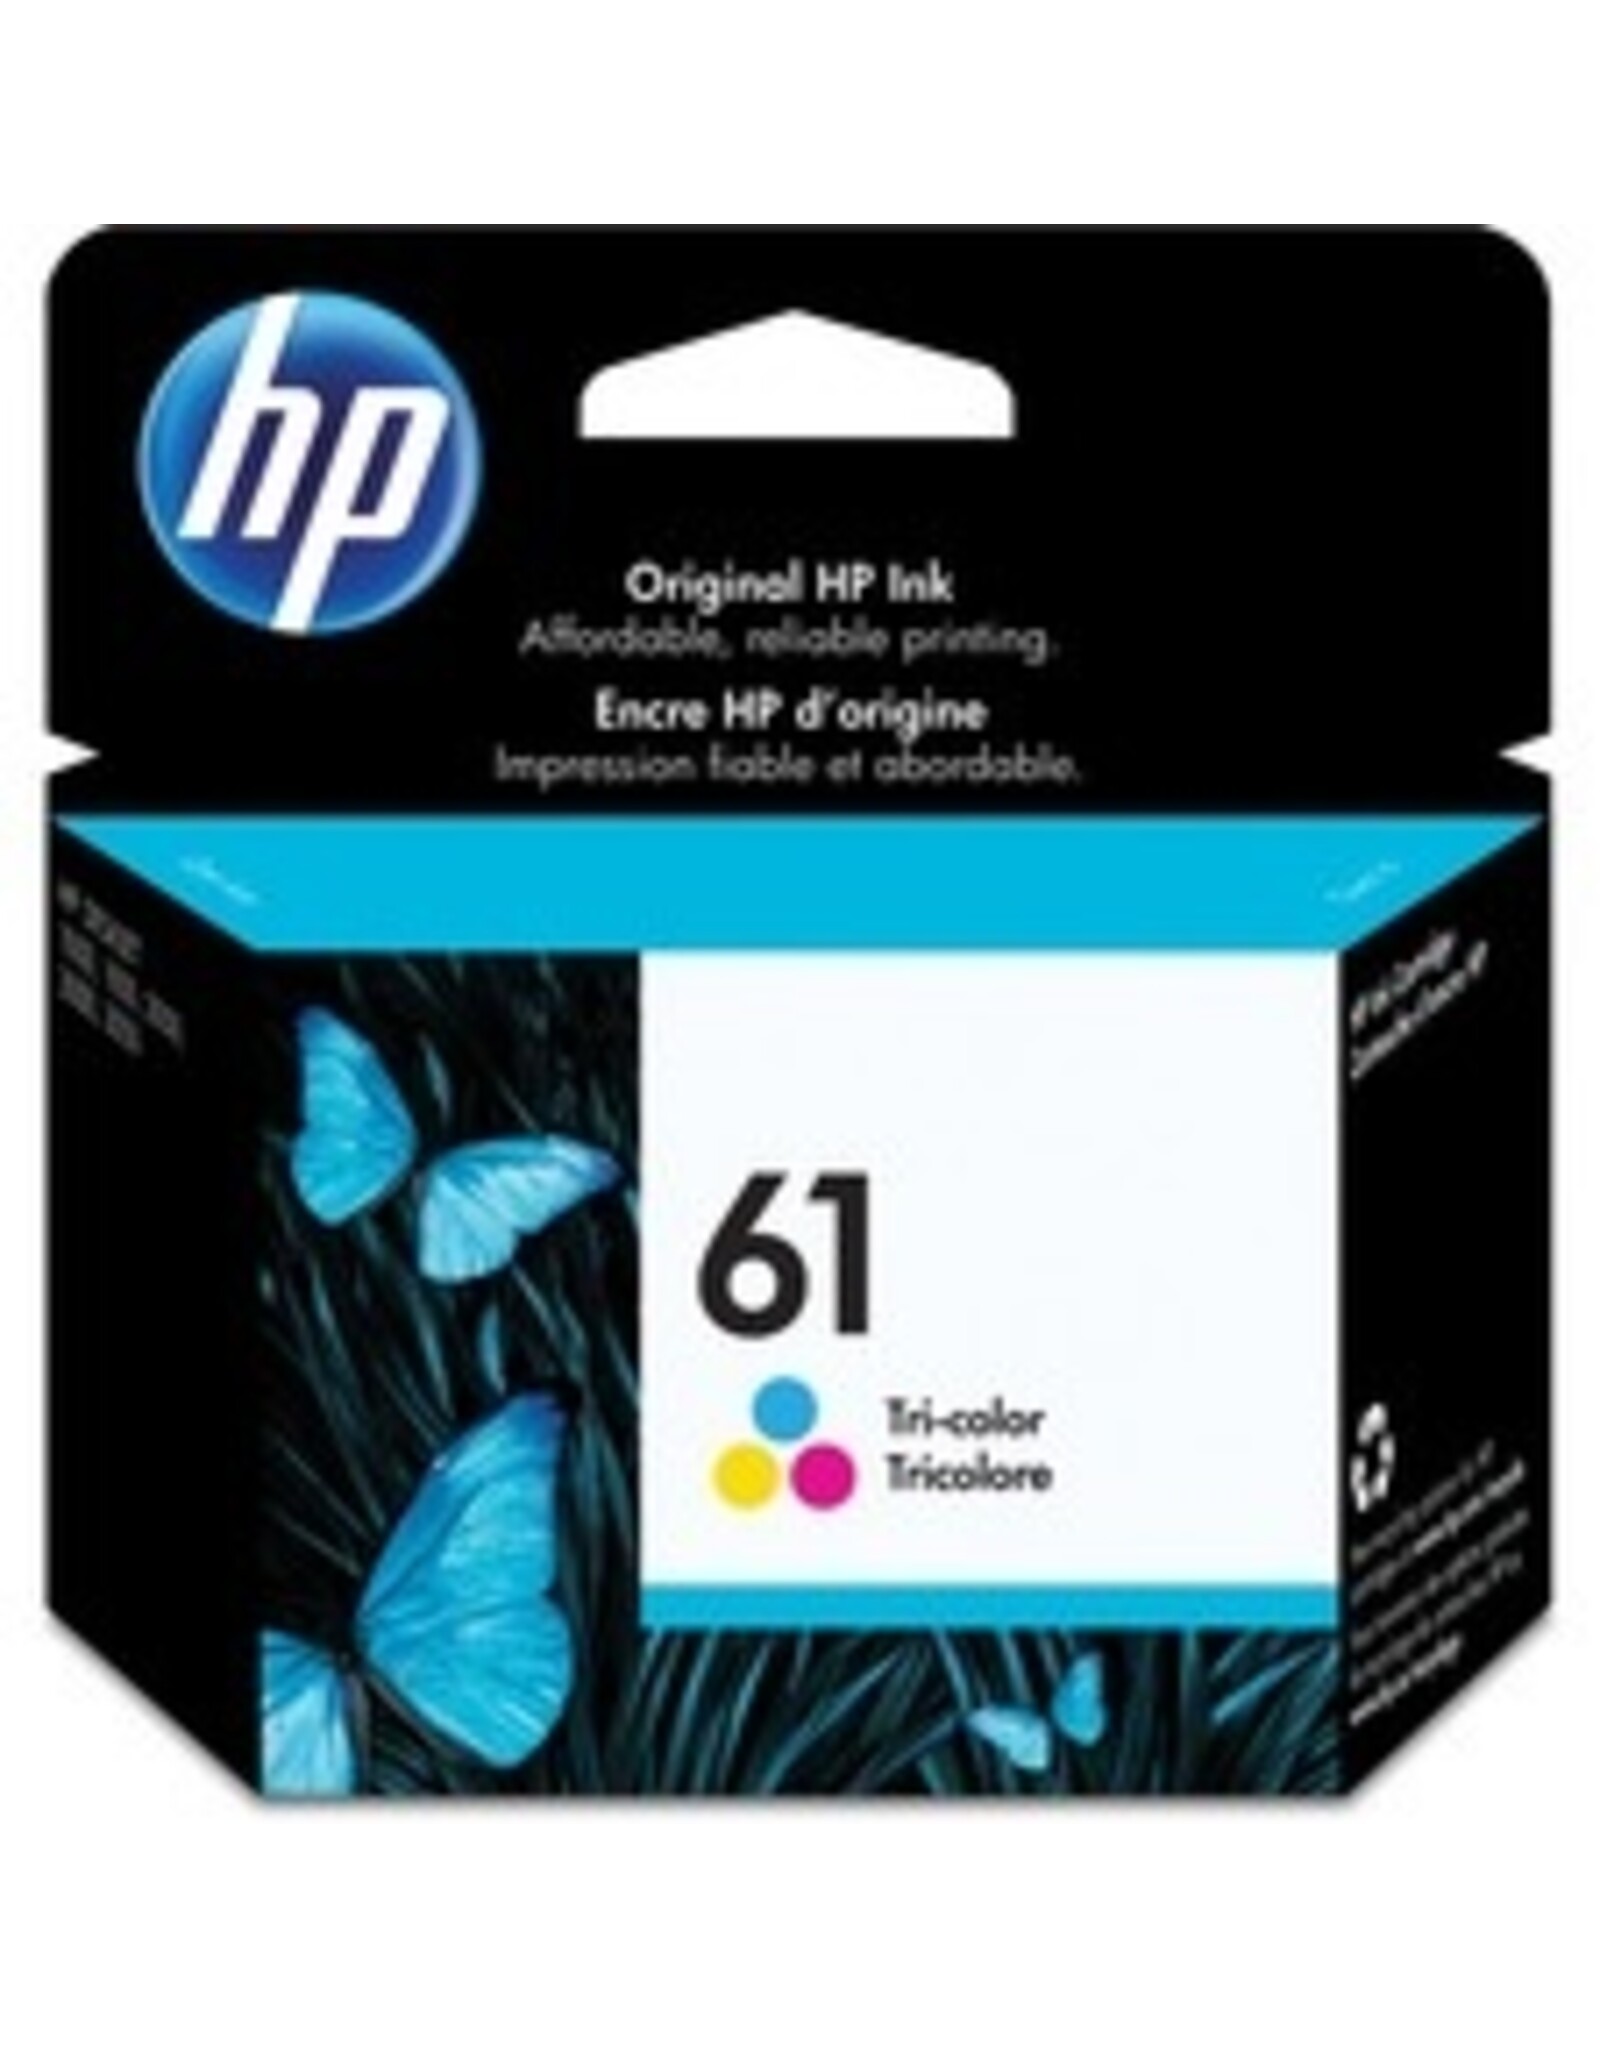 HP HP 61 Tri Colour Original Ink Cartridge - Single Pack